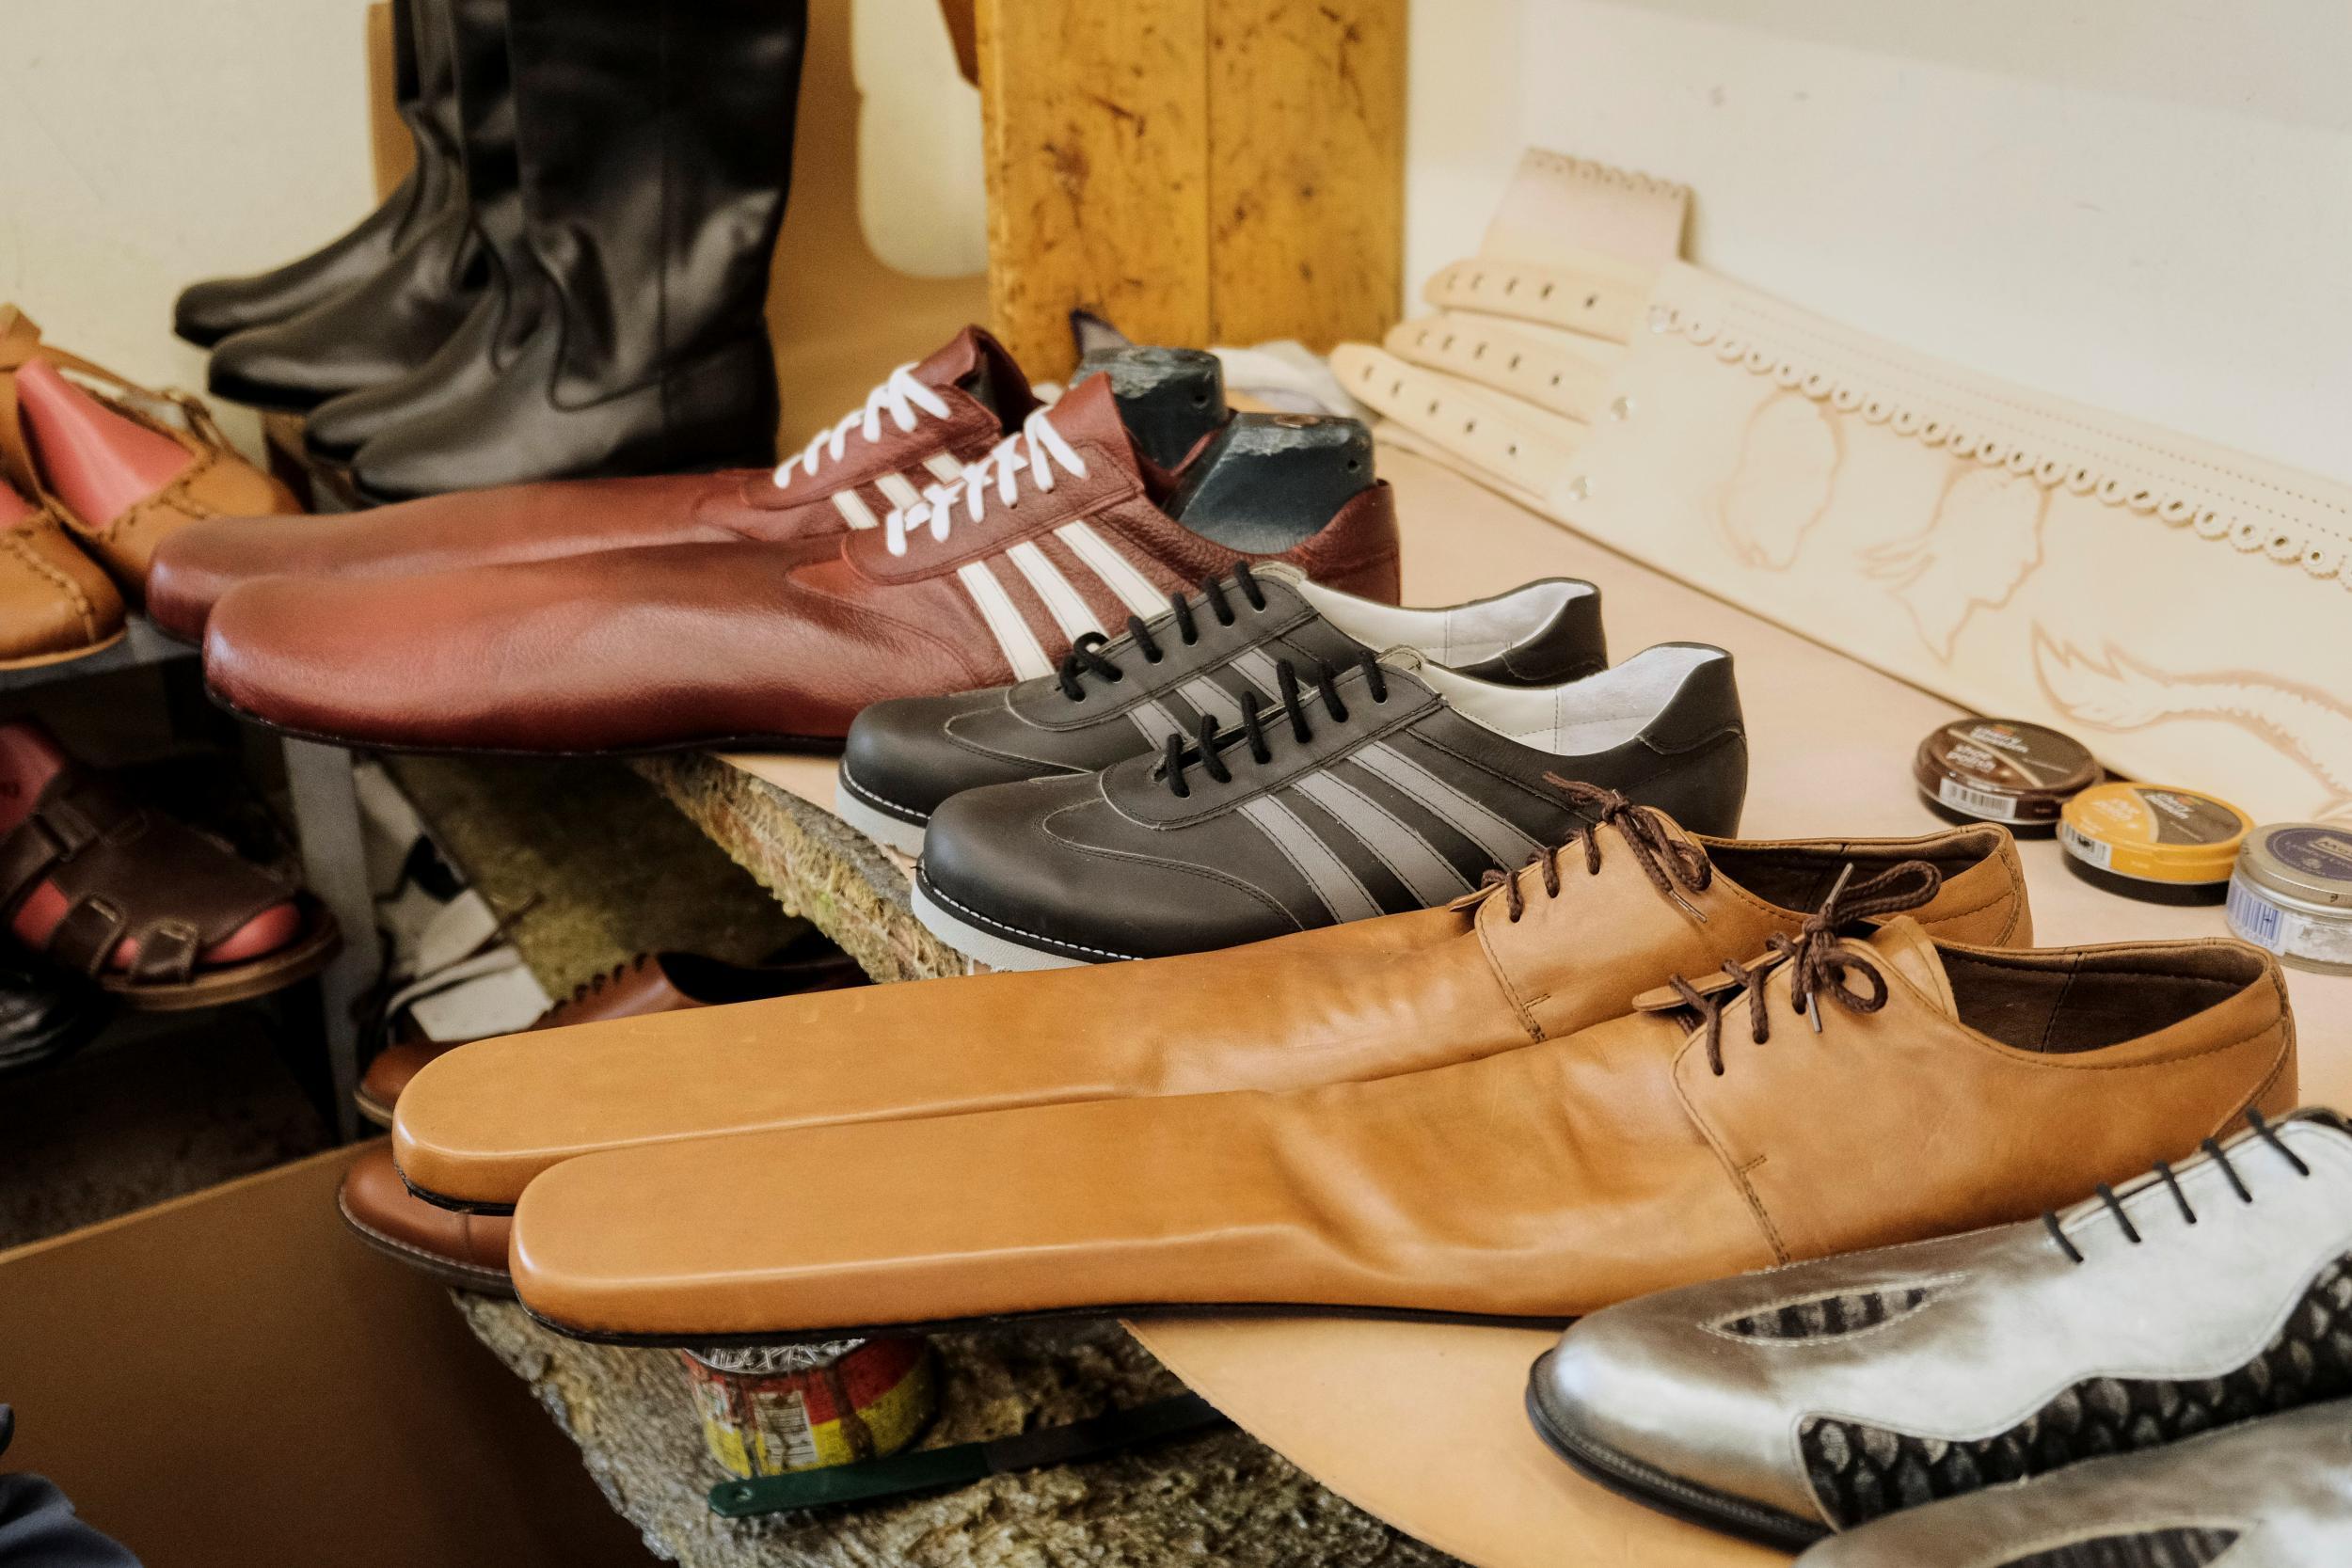 Shoemaker makes size 75 shoes for social distancing (Reuters)